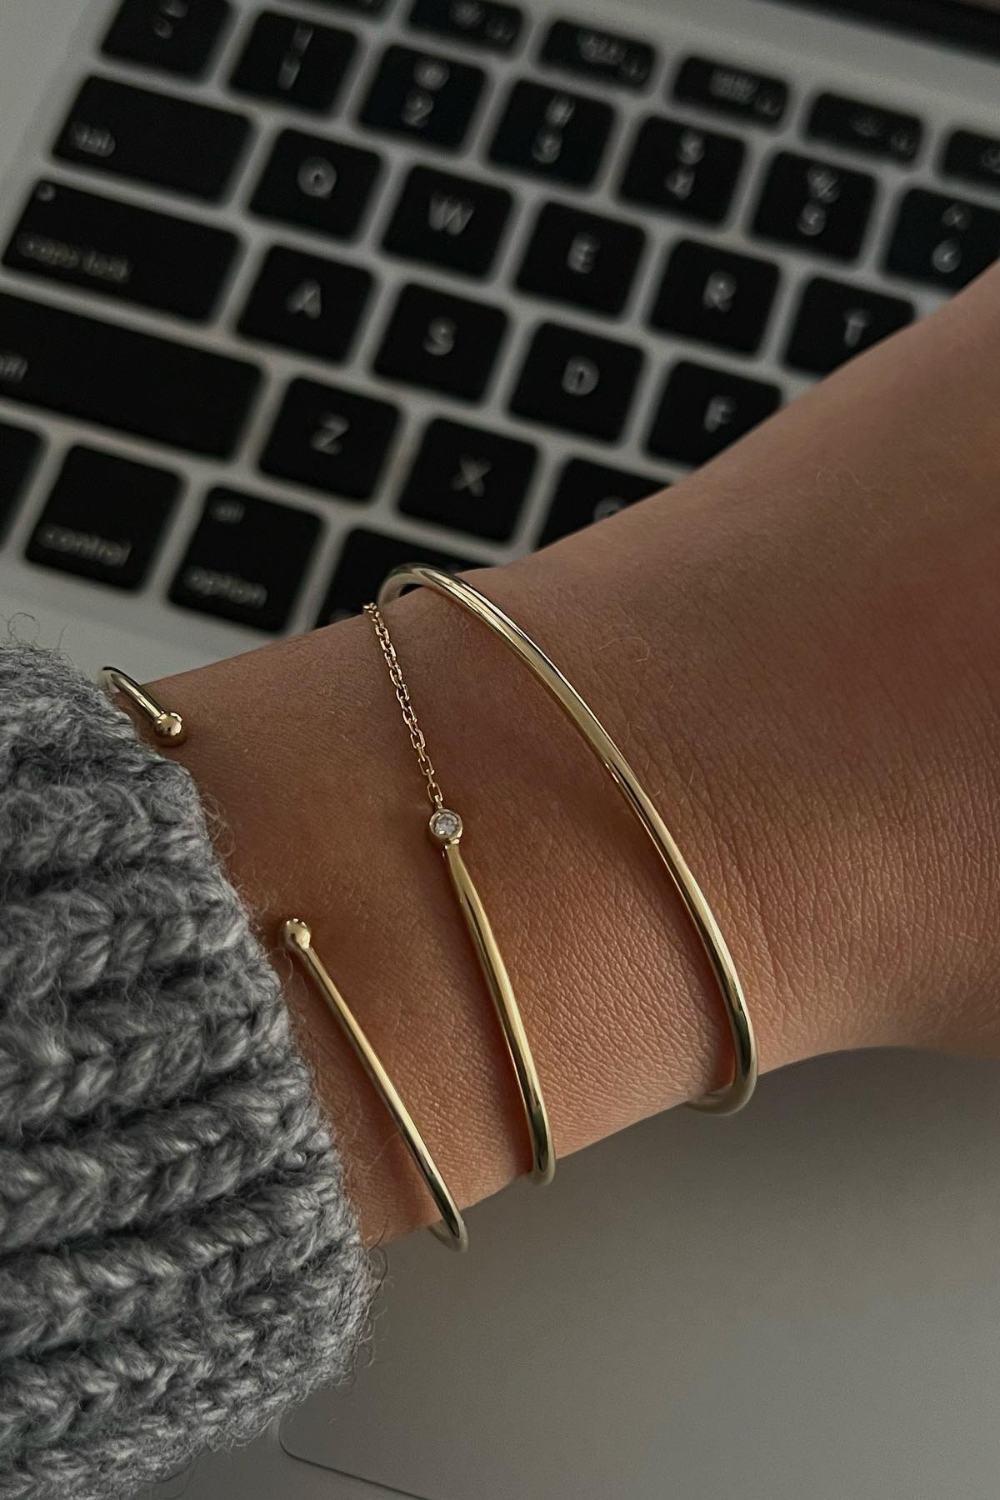 How to stack bracelets for work - less bling bracelets